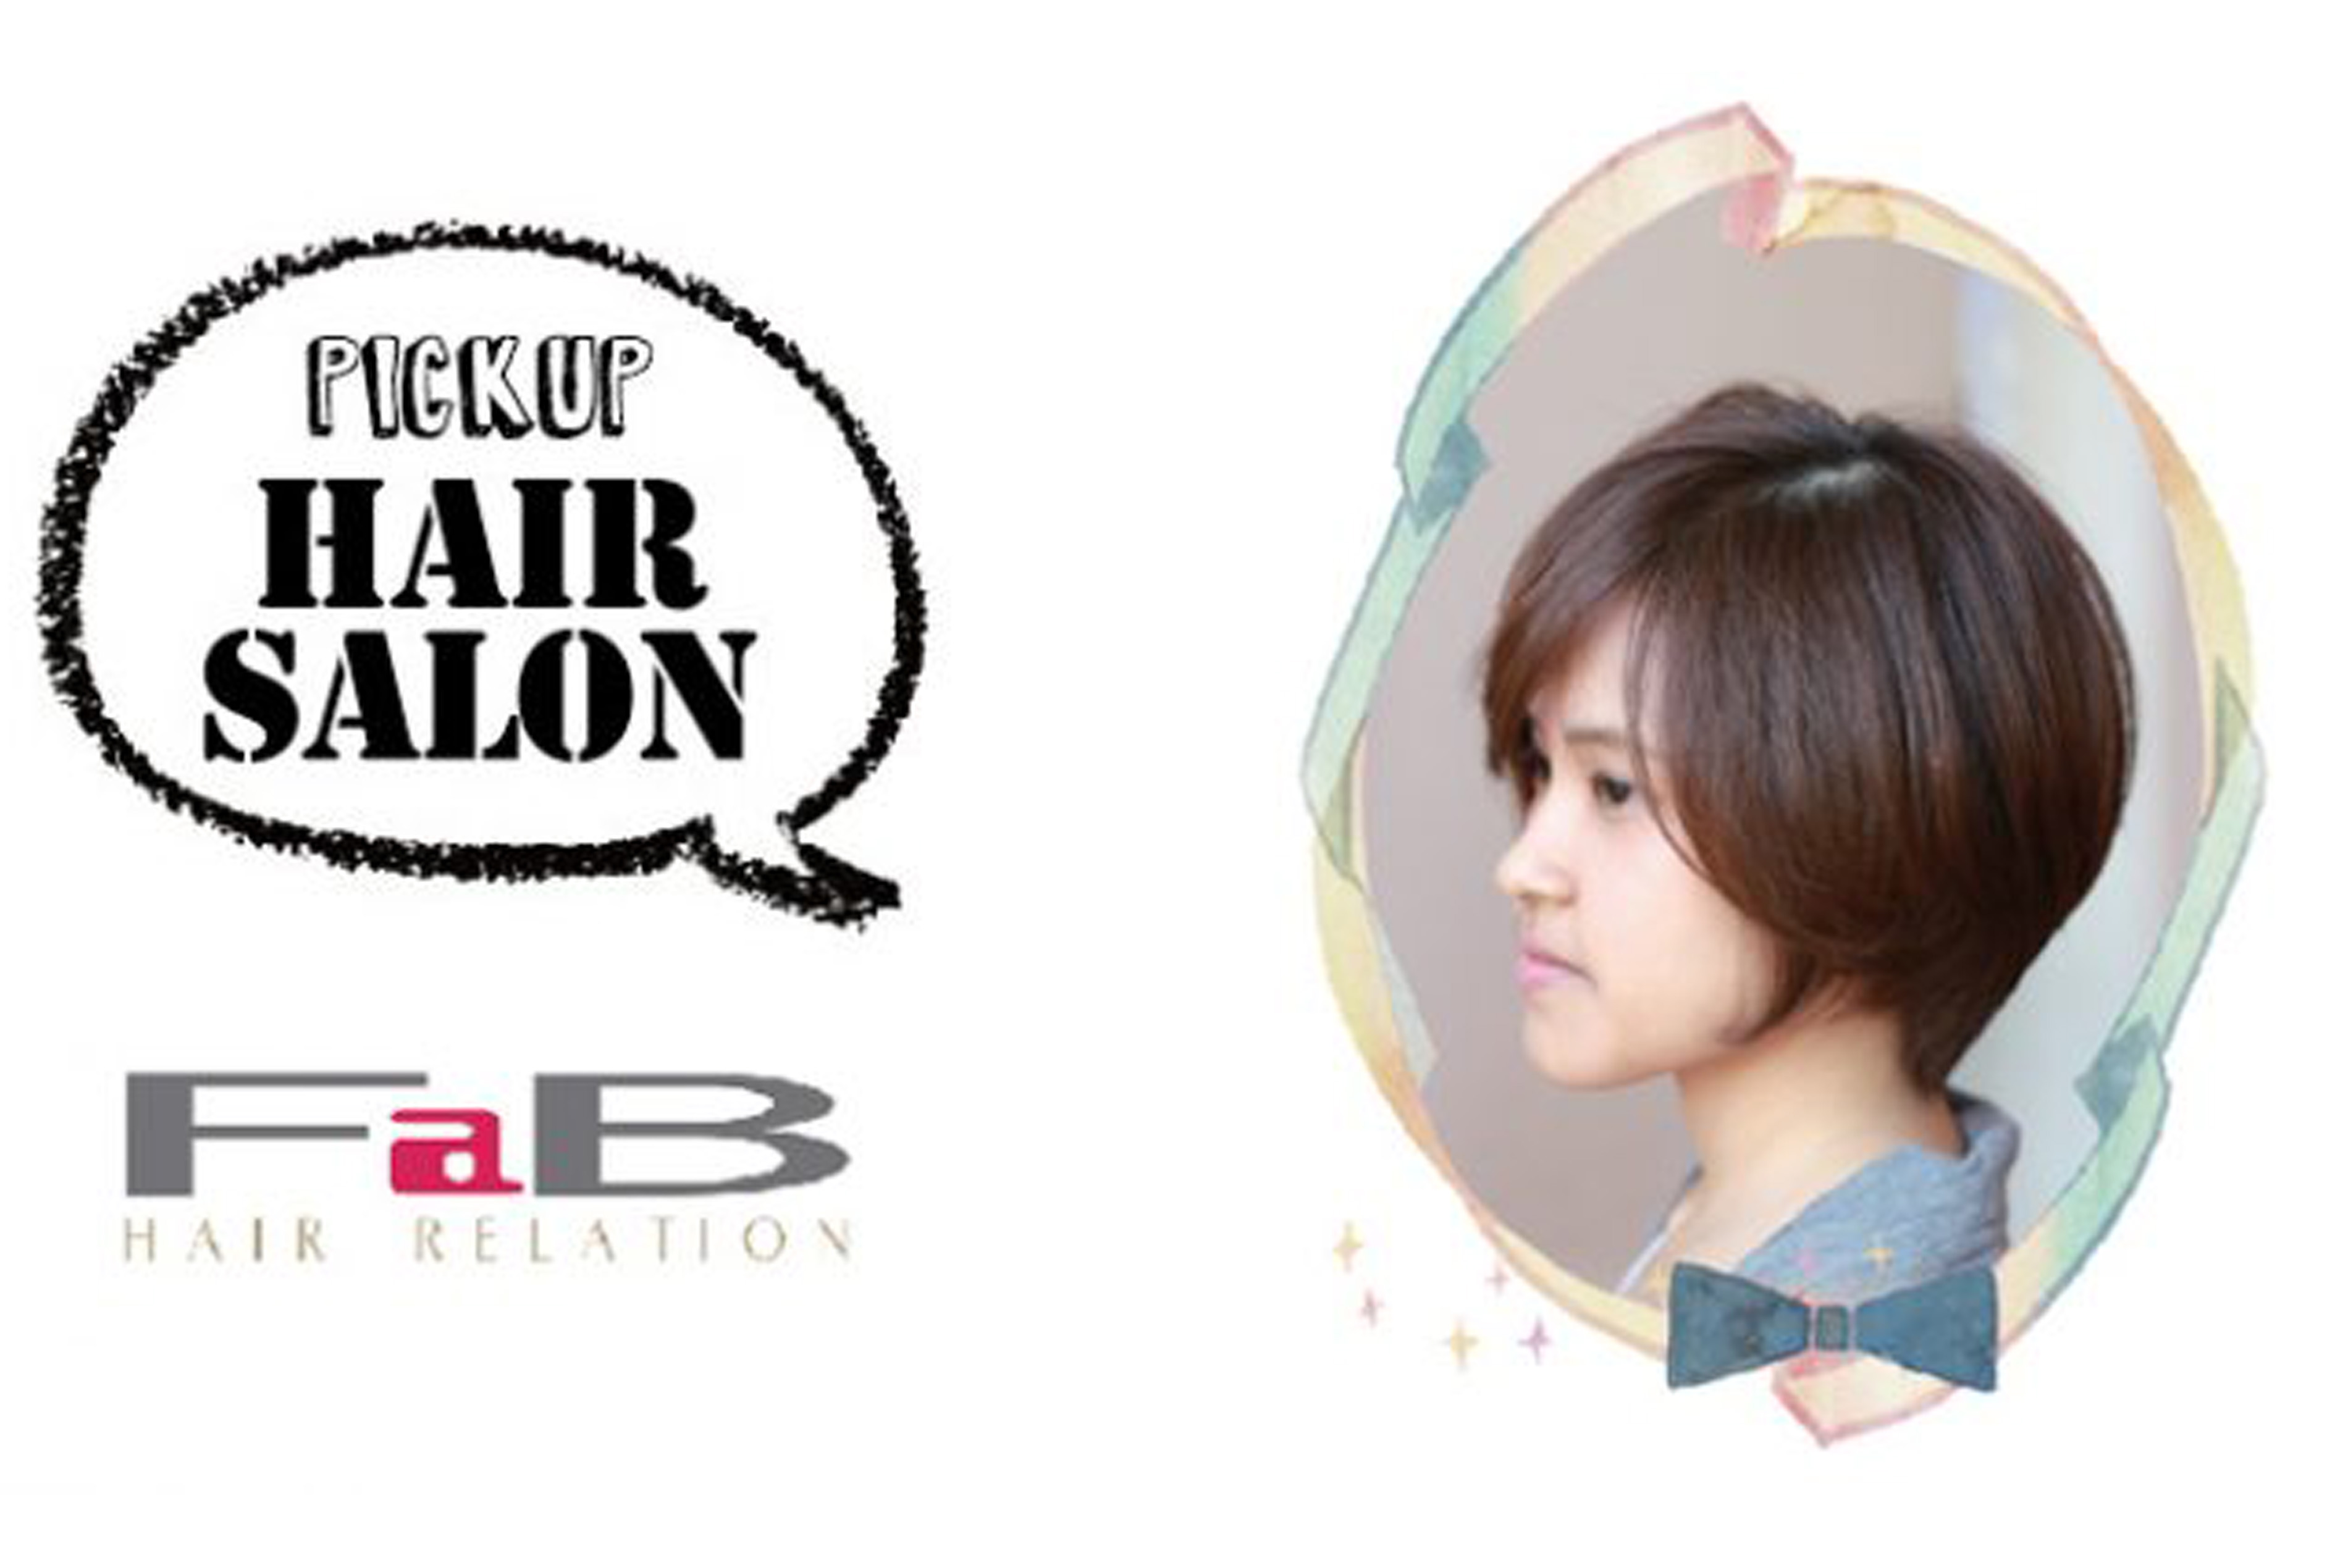 【PICK UP HAIR SALON】FaB RELATION Bangkok - ワイズデジタル【タイで生活する人のための情報サイト】